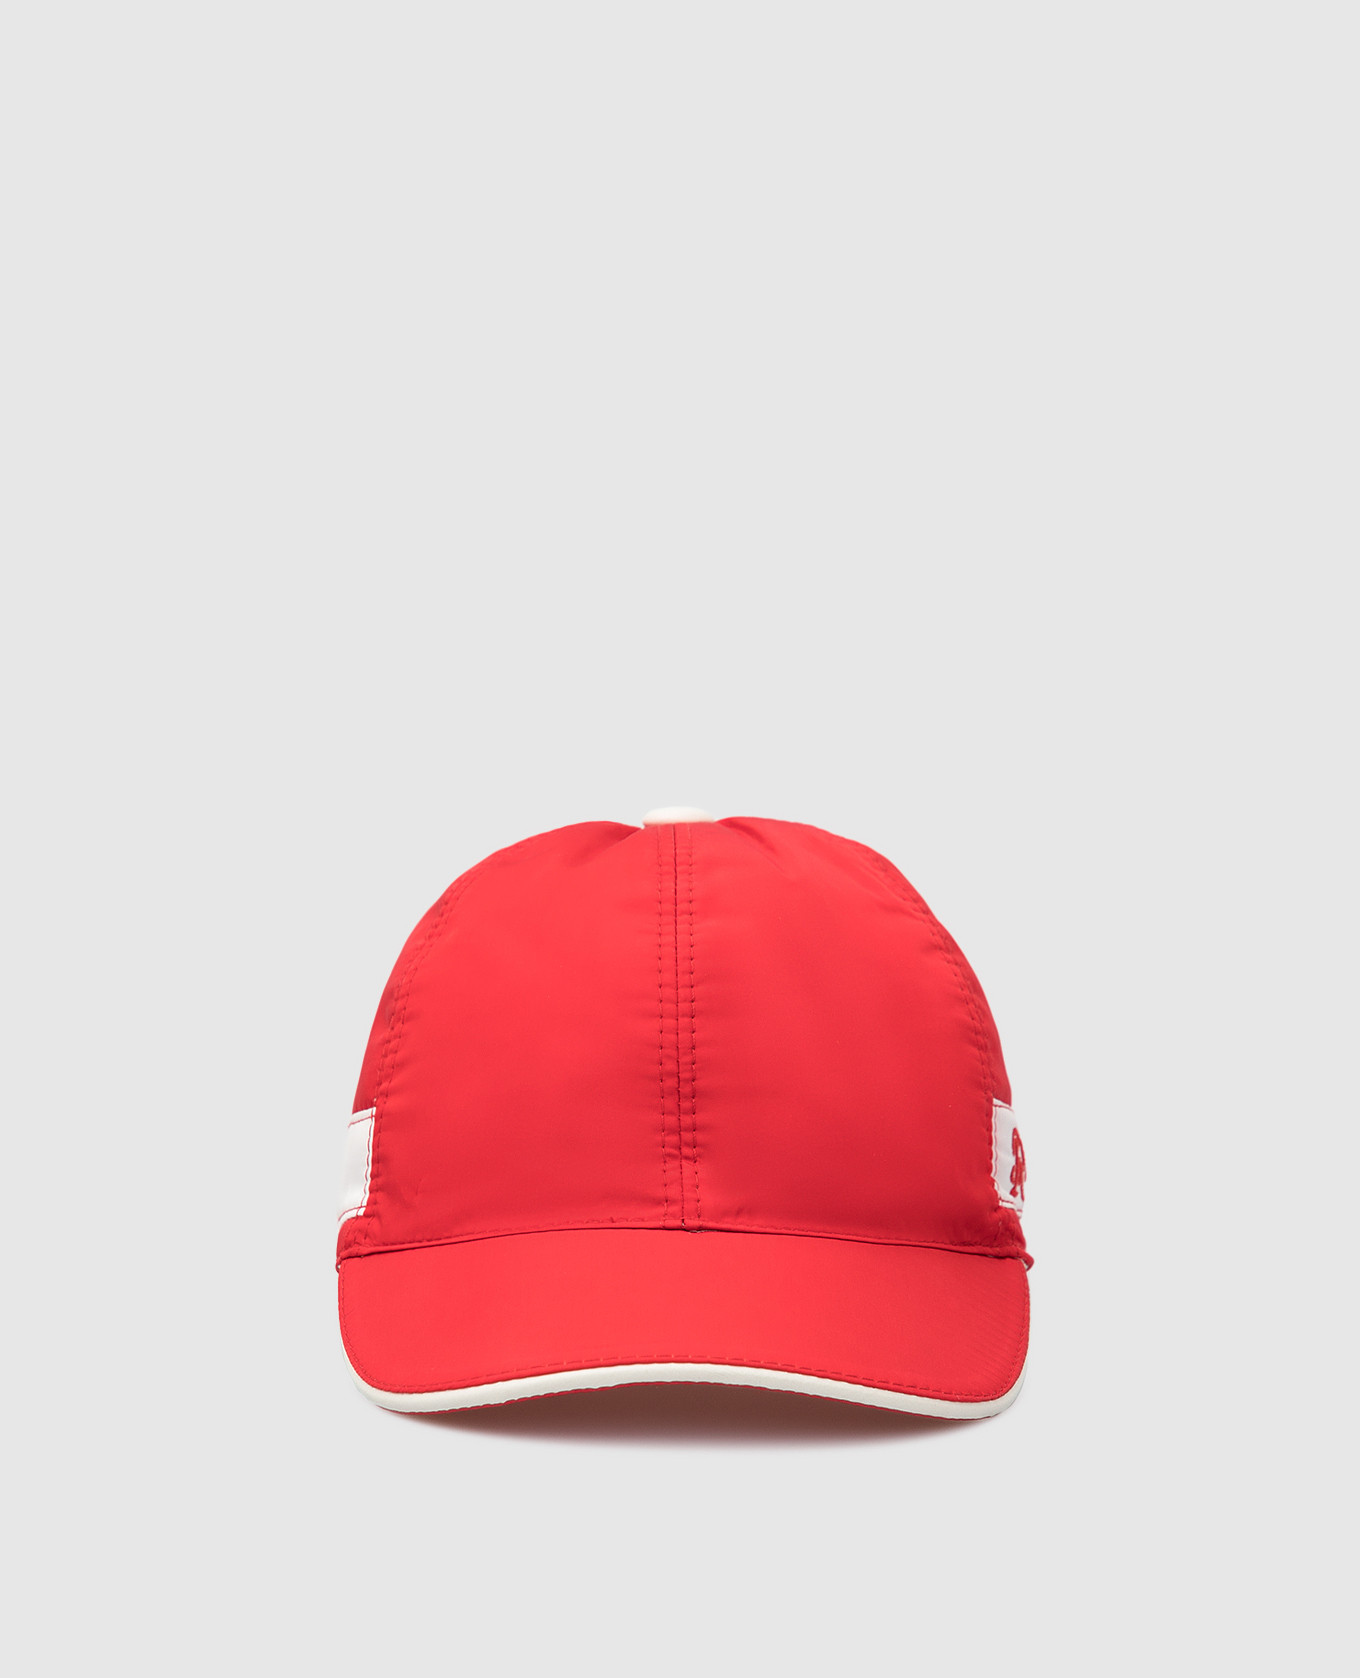 Children's red cap with logo